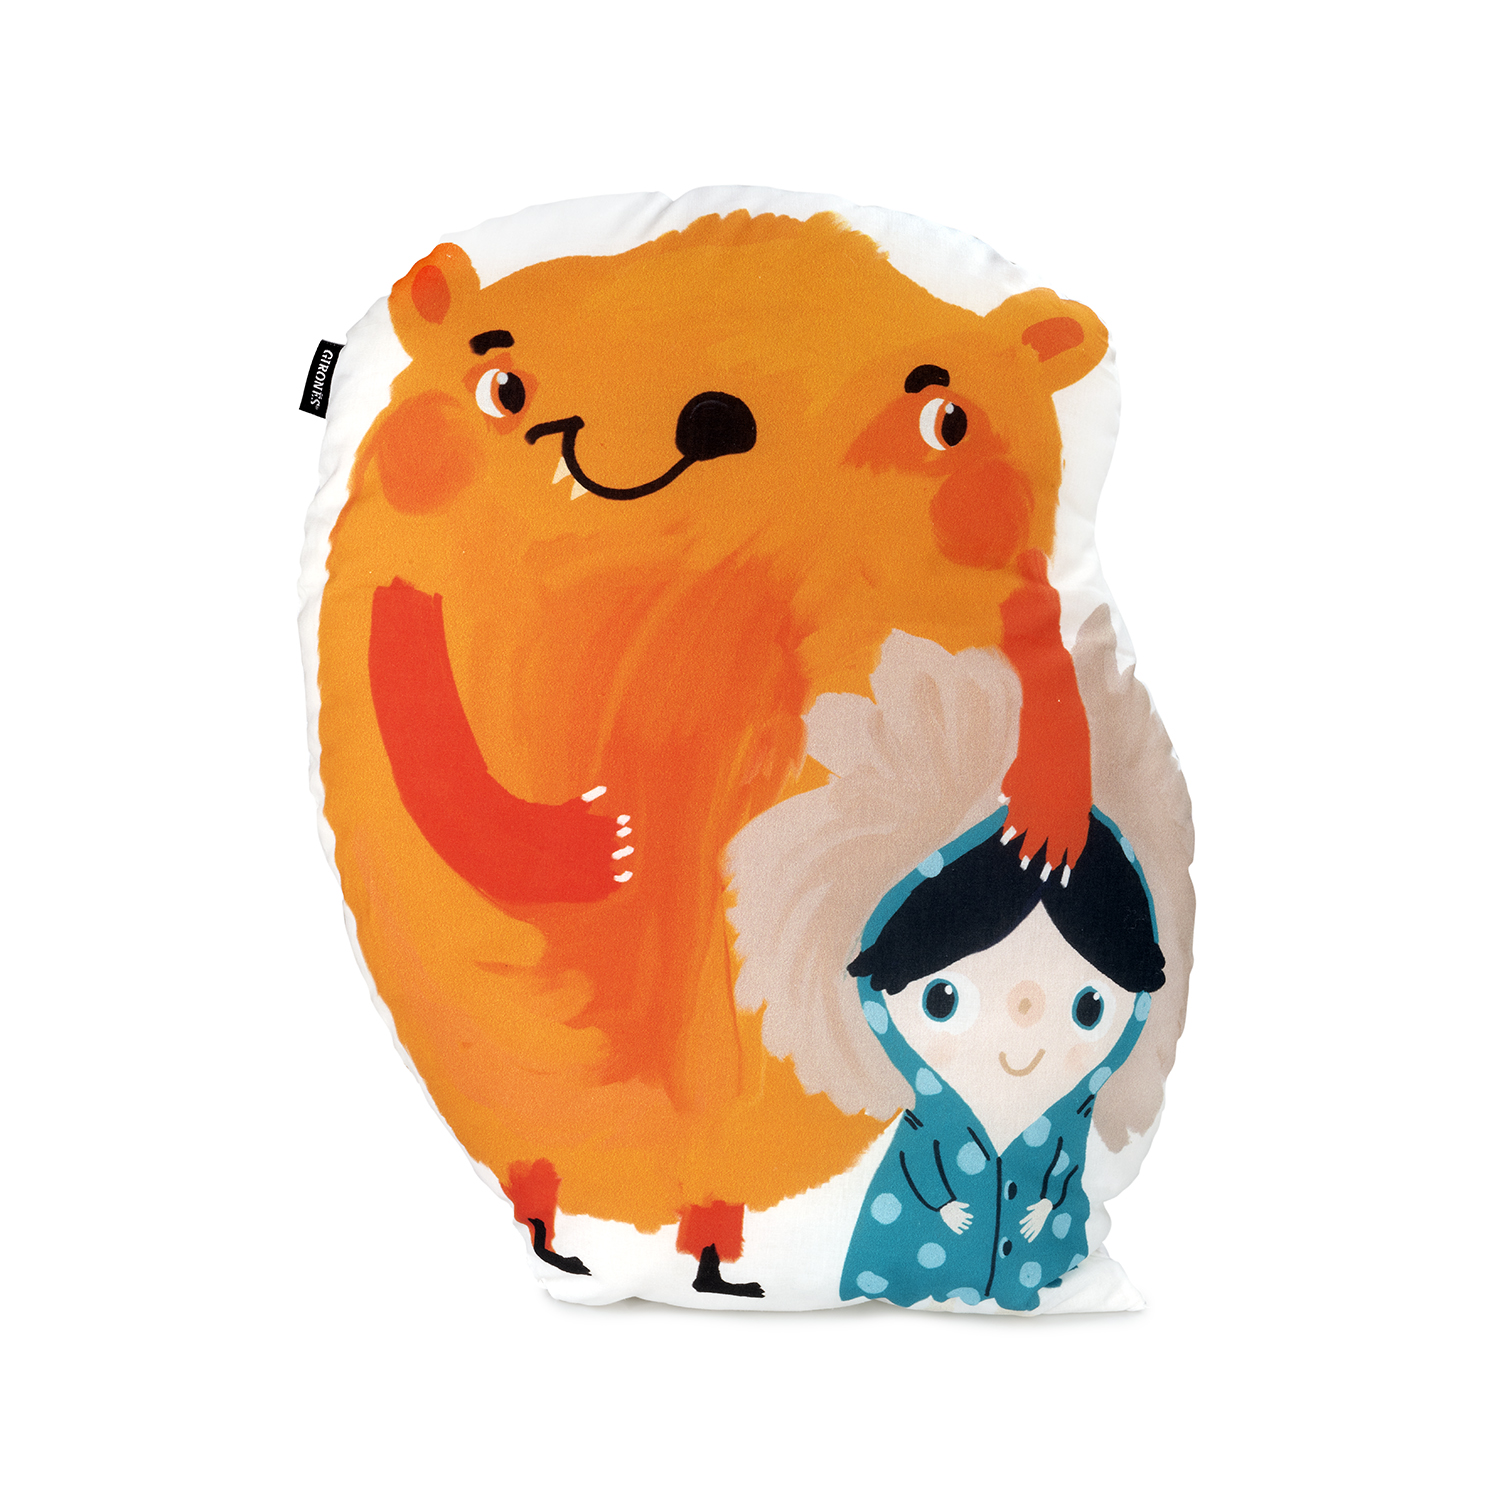 Girl and bear shaped cushion by GironesHome